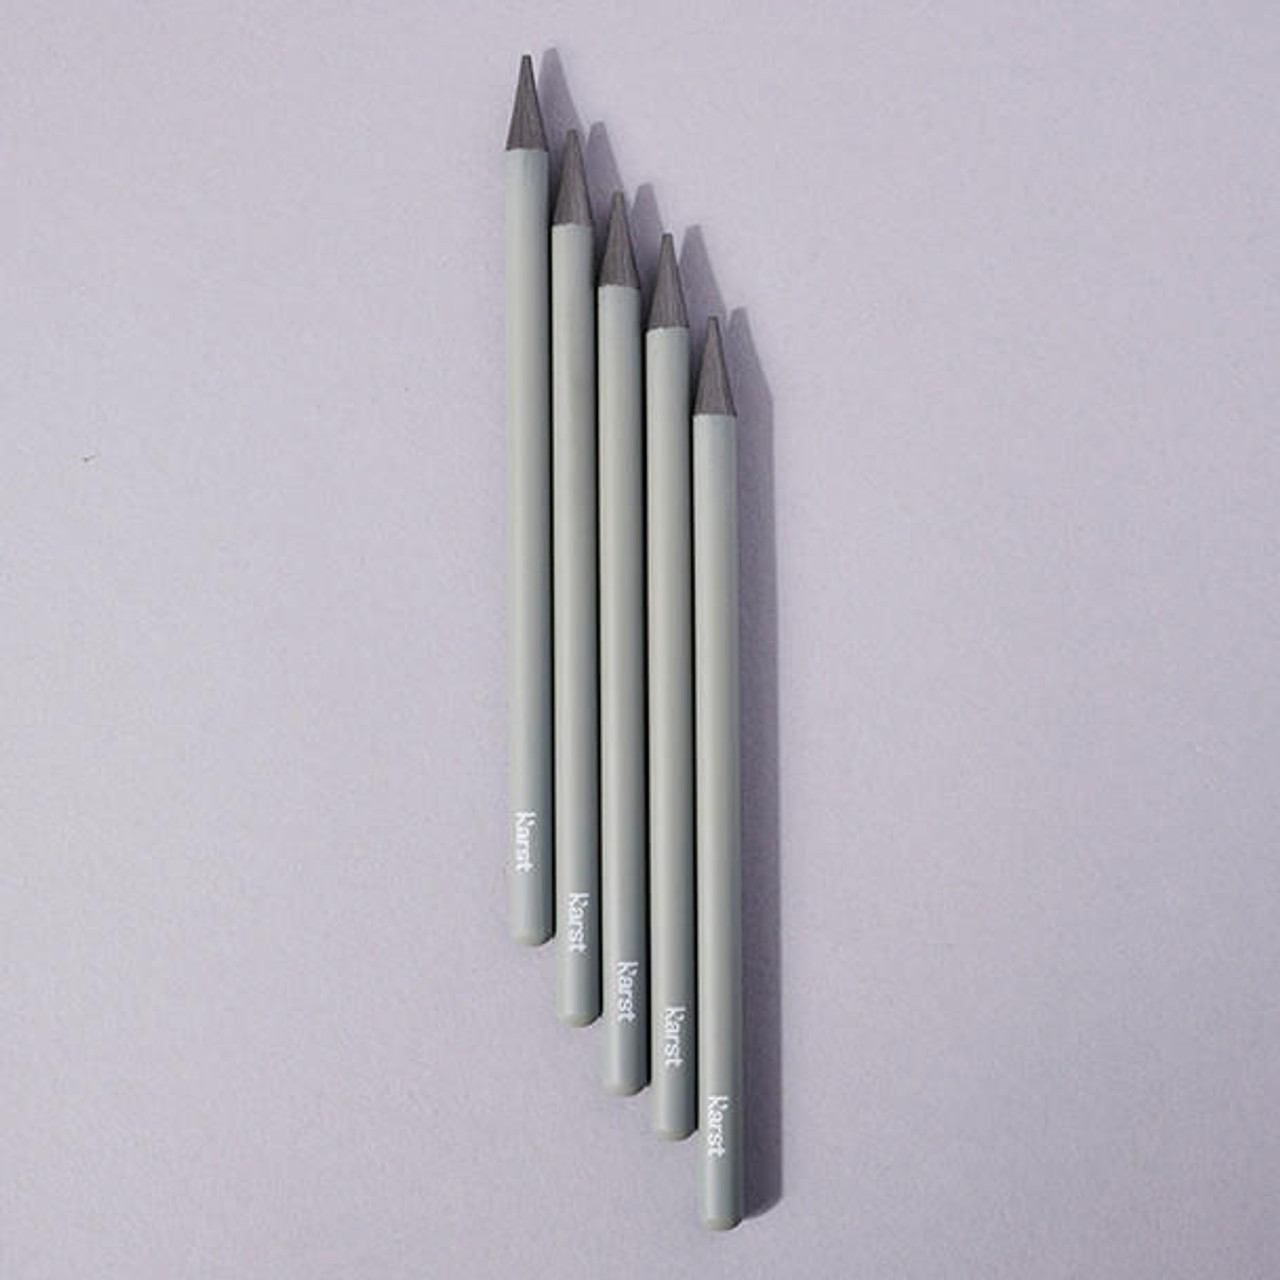 Karst Woodless Graphite Pencils Set of 5 - Philadelphia Museum Of Art